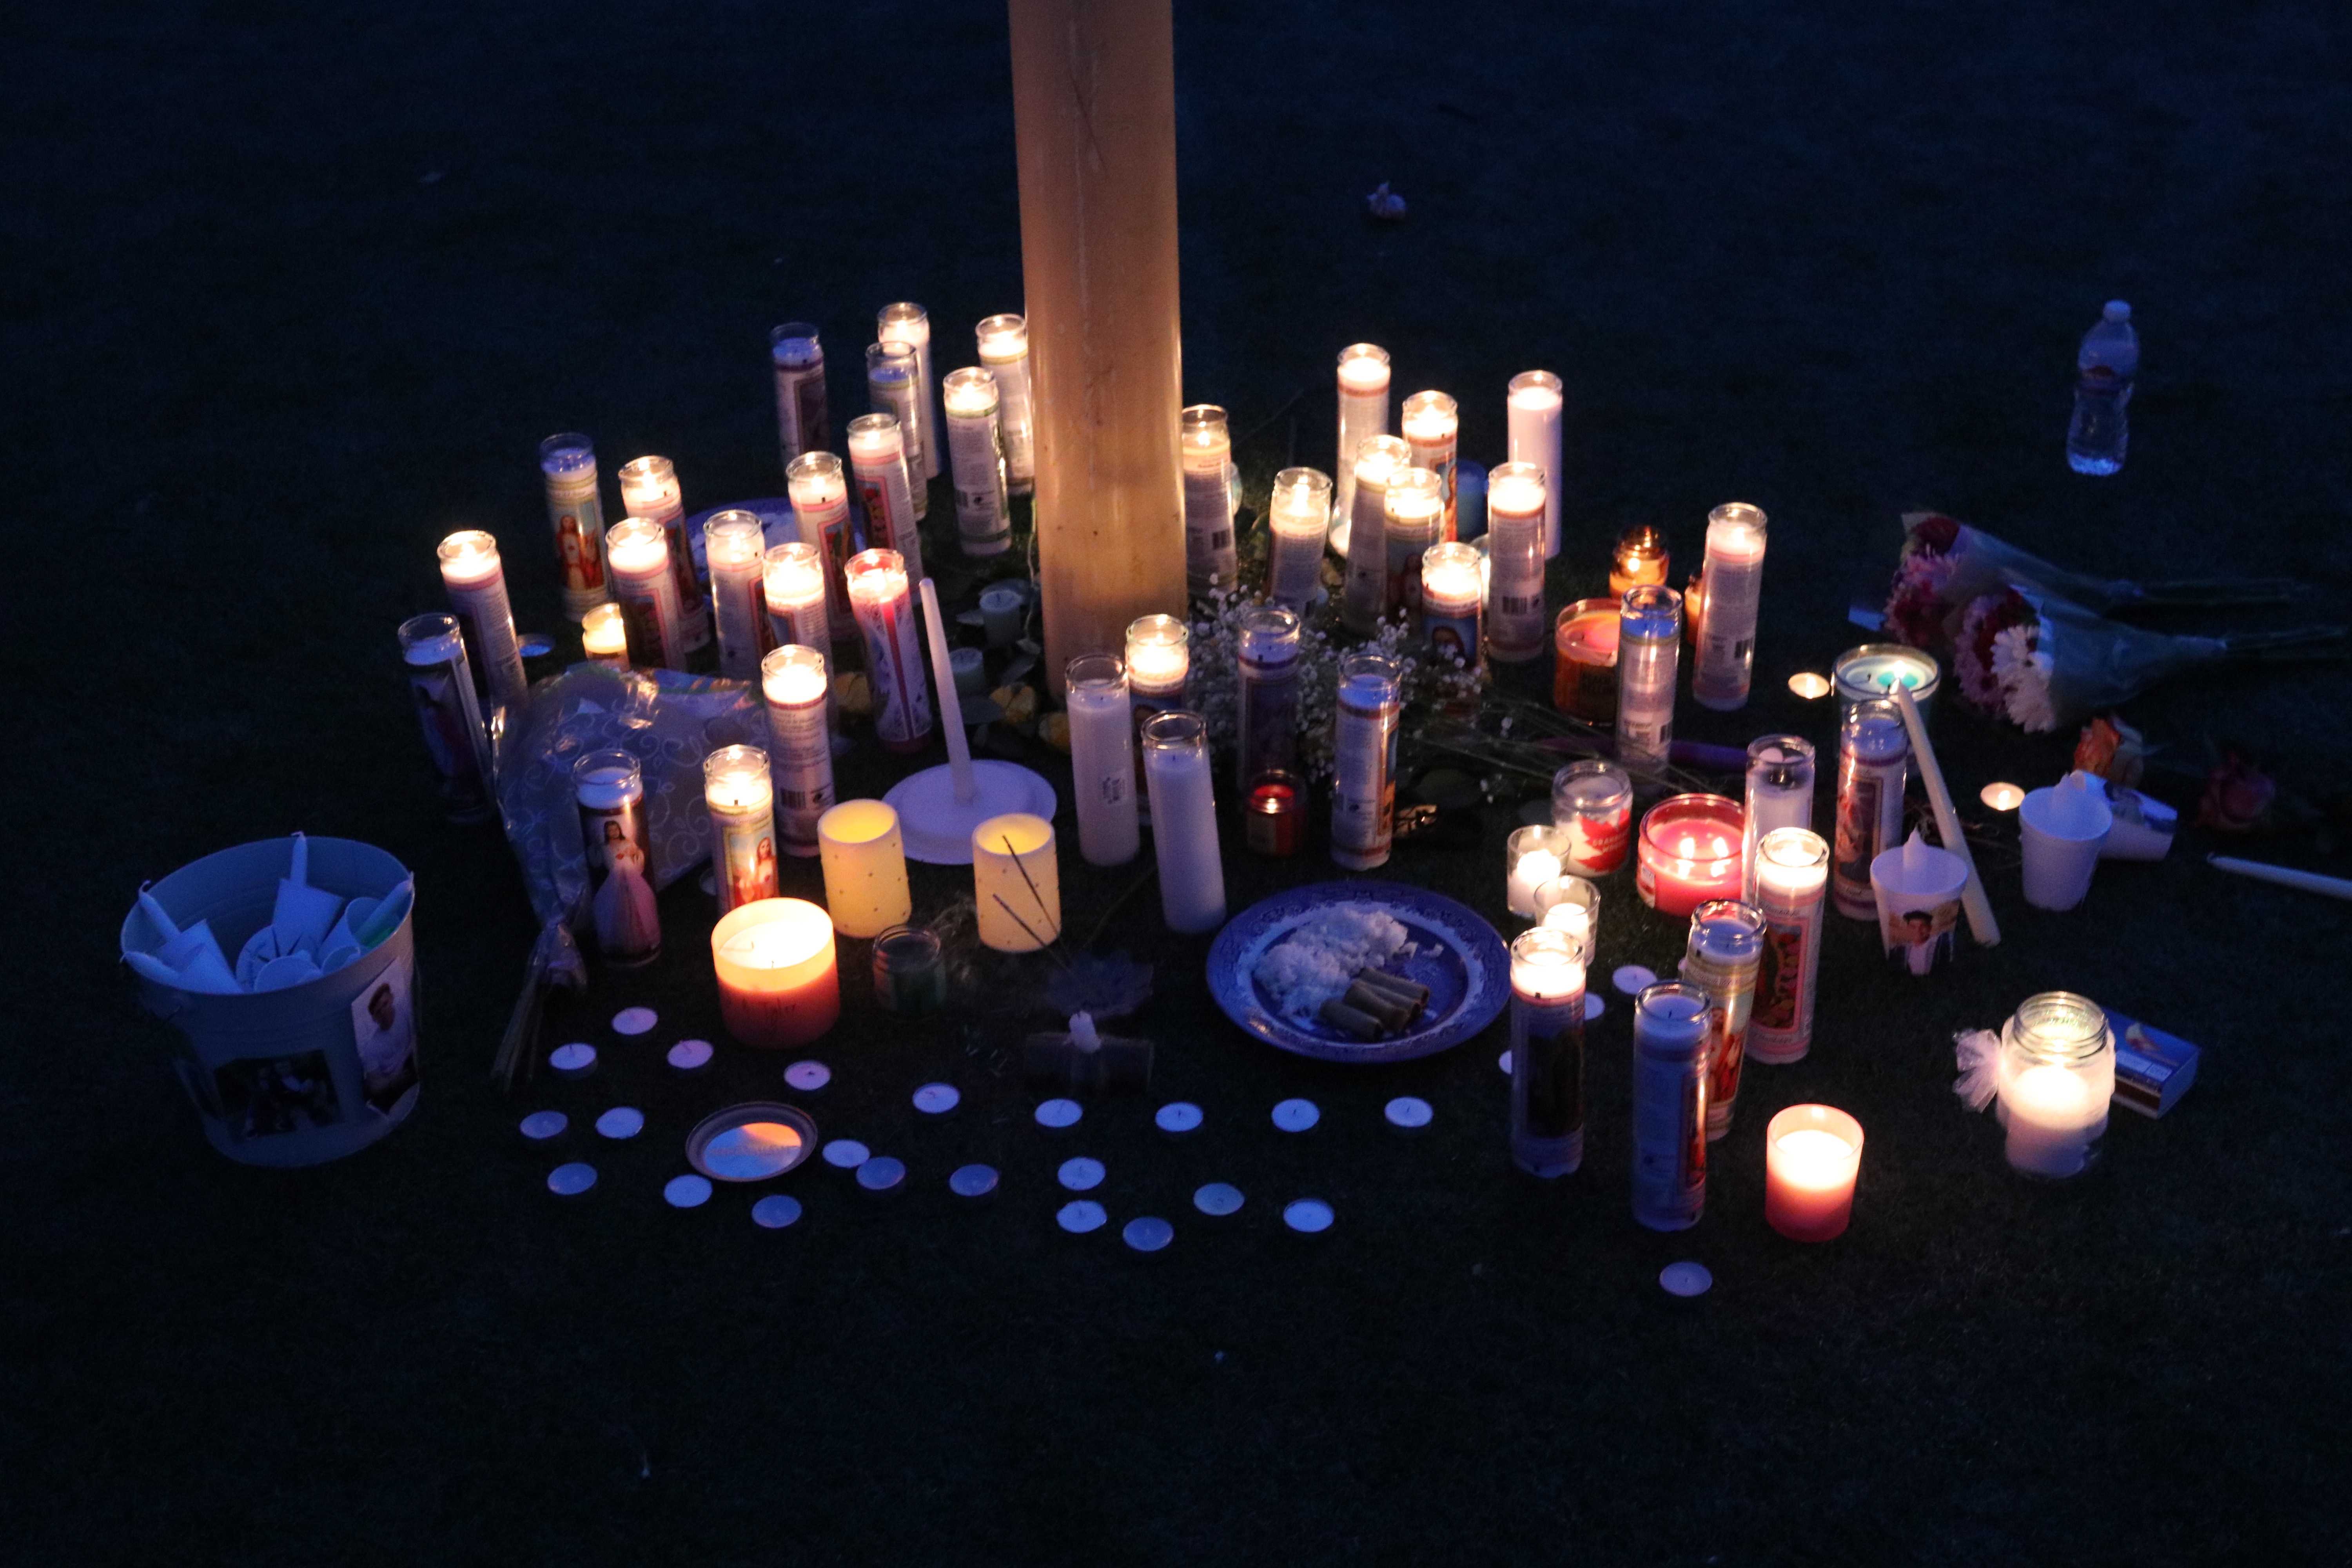 A candlelight memorial in honor of Santos and Bracken at Skyhawk Stadium. (Hunter Mann)